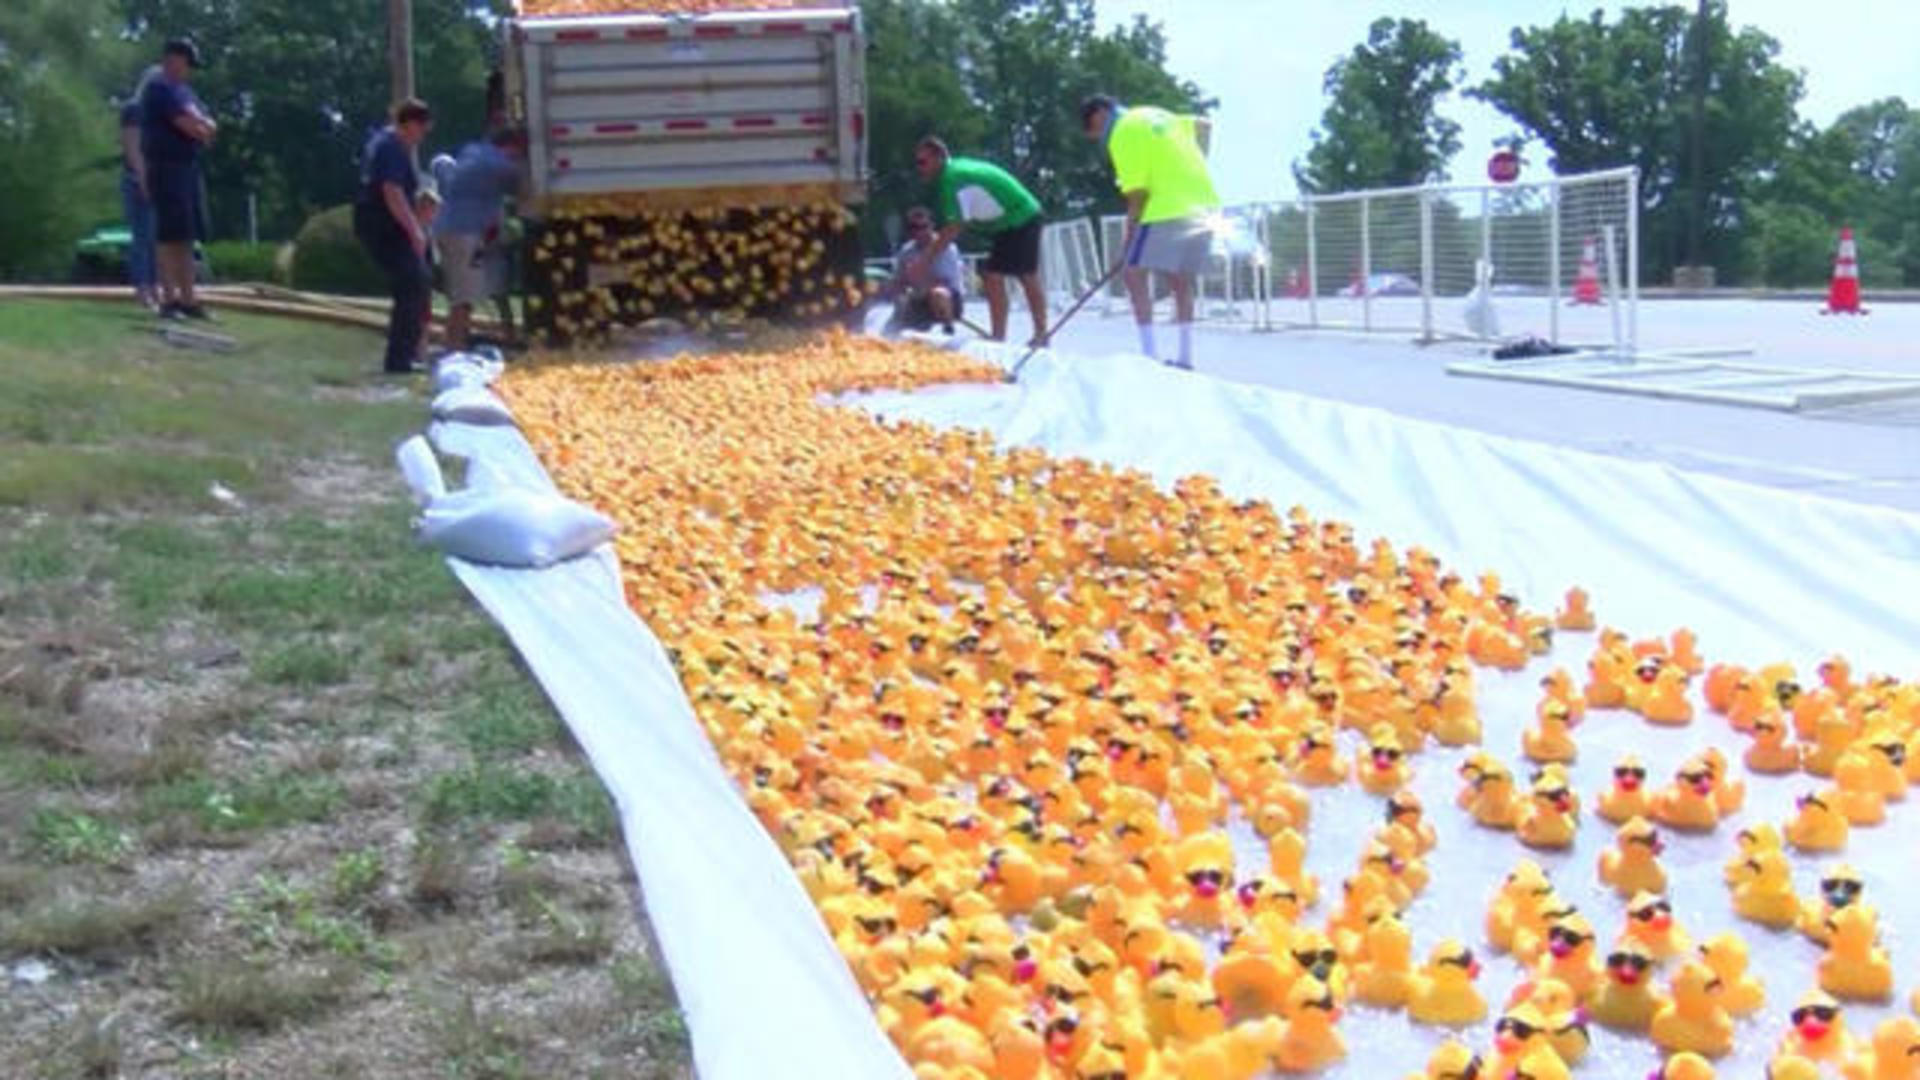 Einde Delegatie vrijwilliger Rubber ducky race for a cause - CBS News